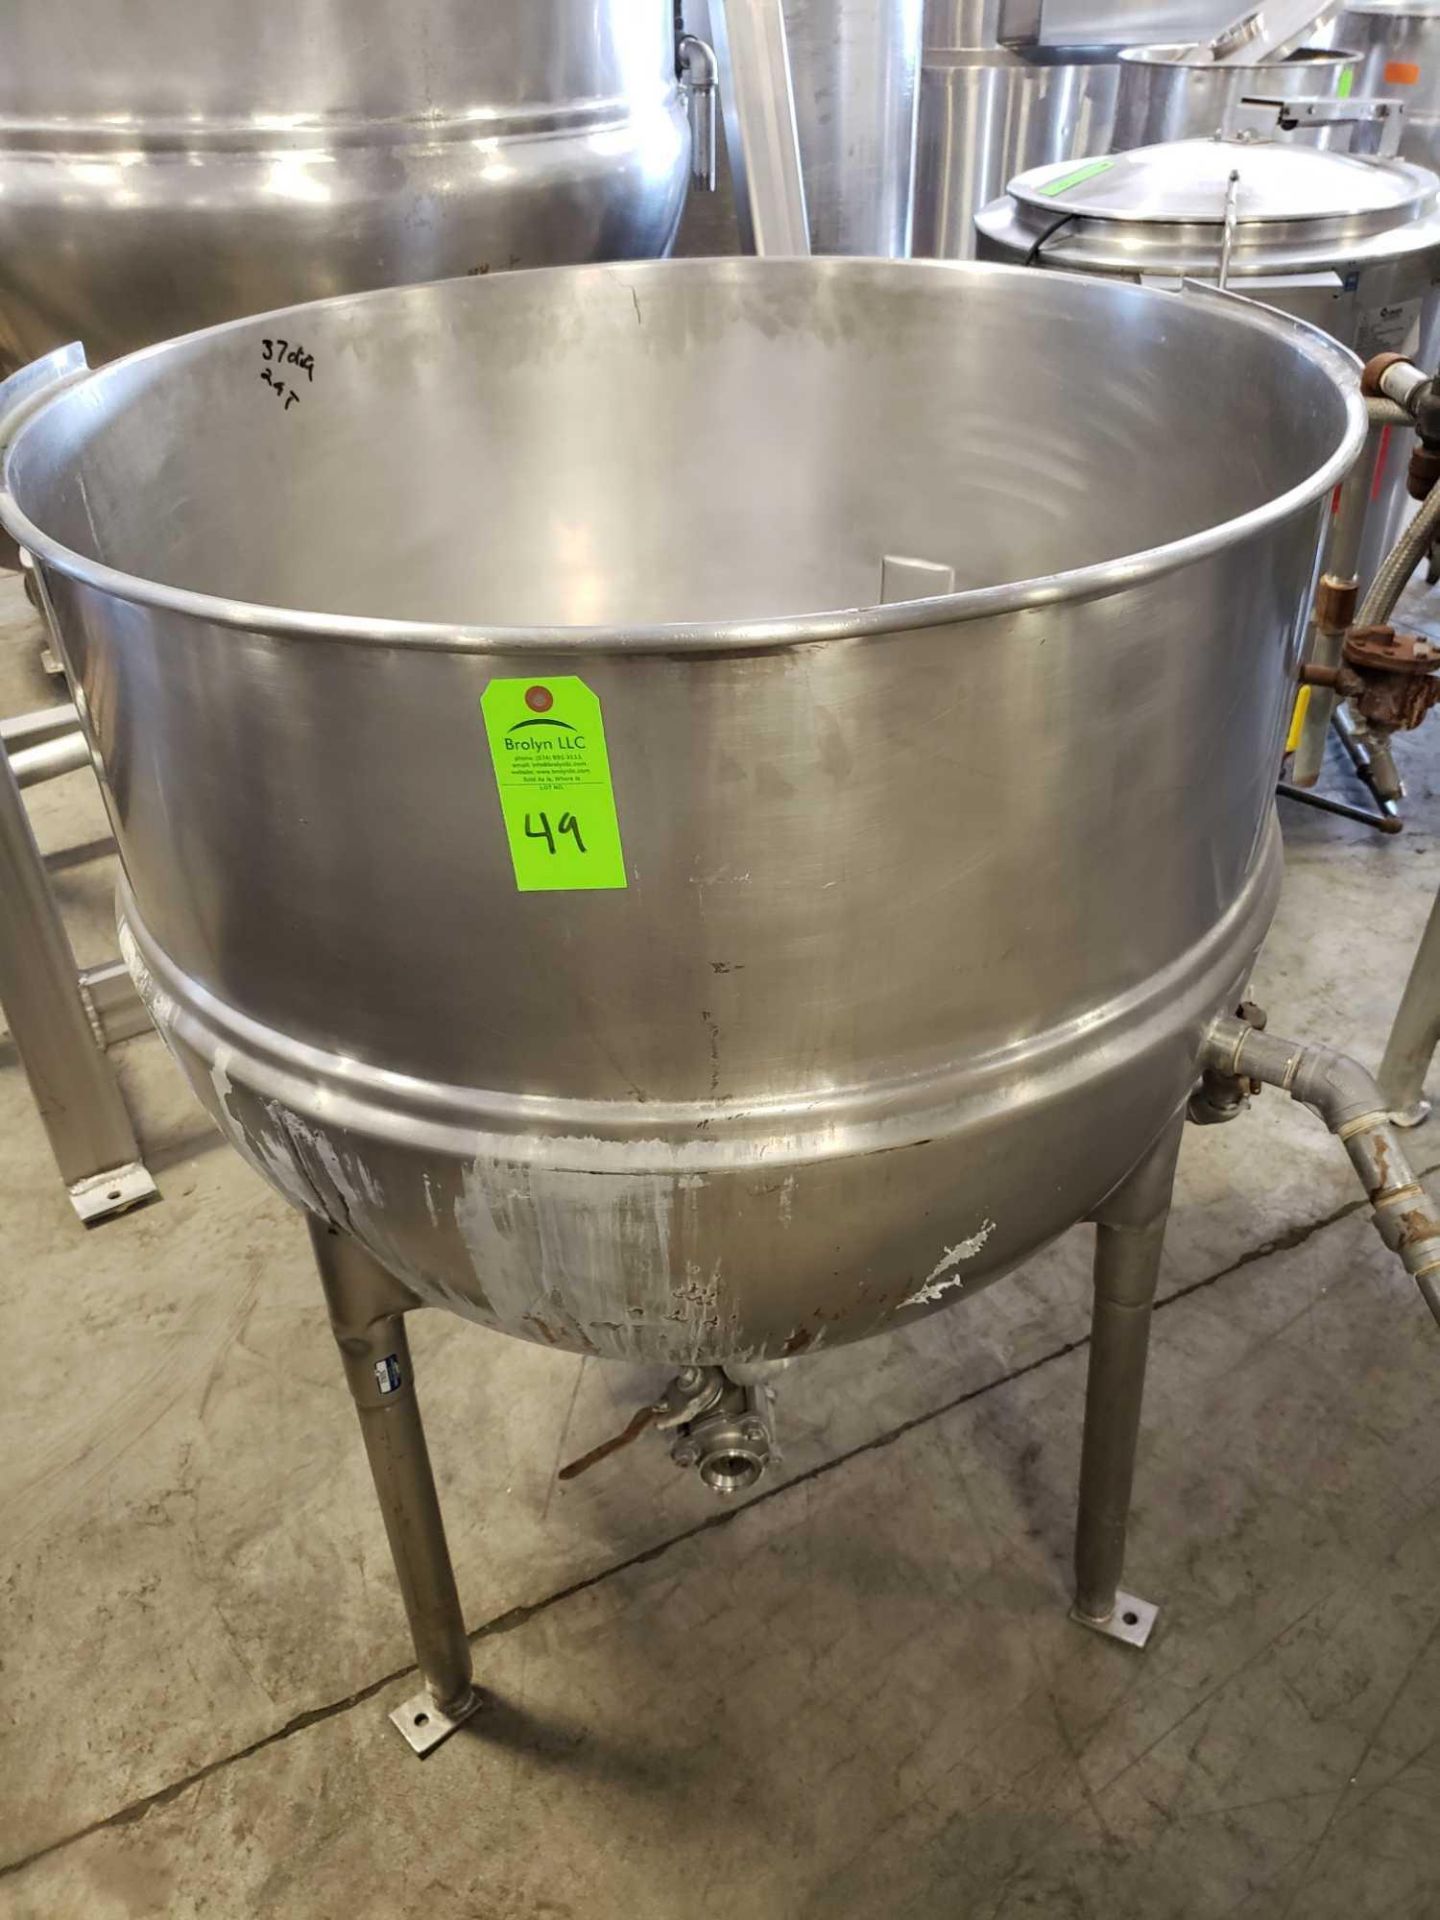 100 gallon Dover / Groen model N-100 jacketed steam kettle. 37" diameter x 29" interior depth. - Image 2 of 10